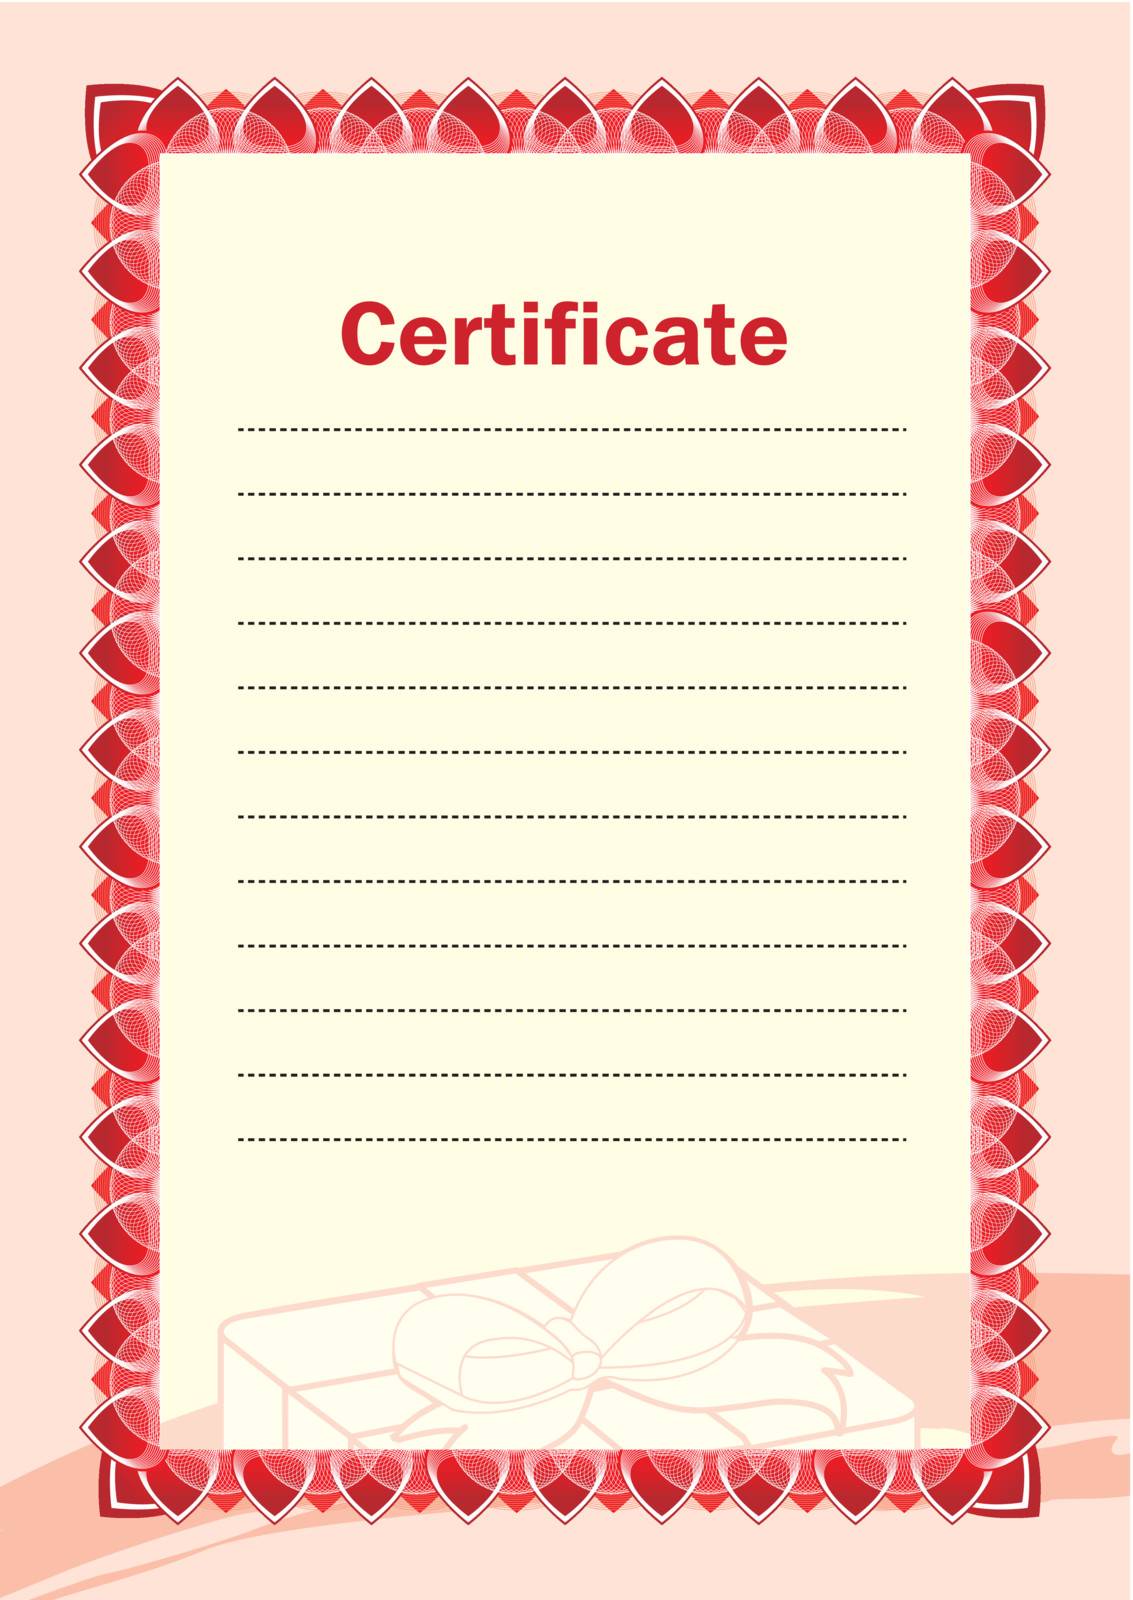 Certificate by sermax55